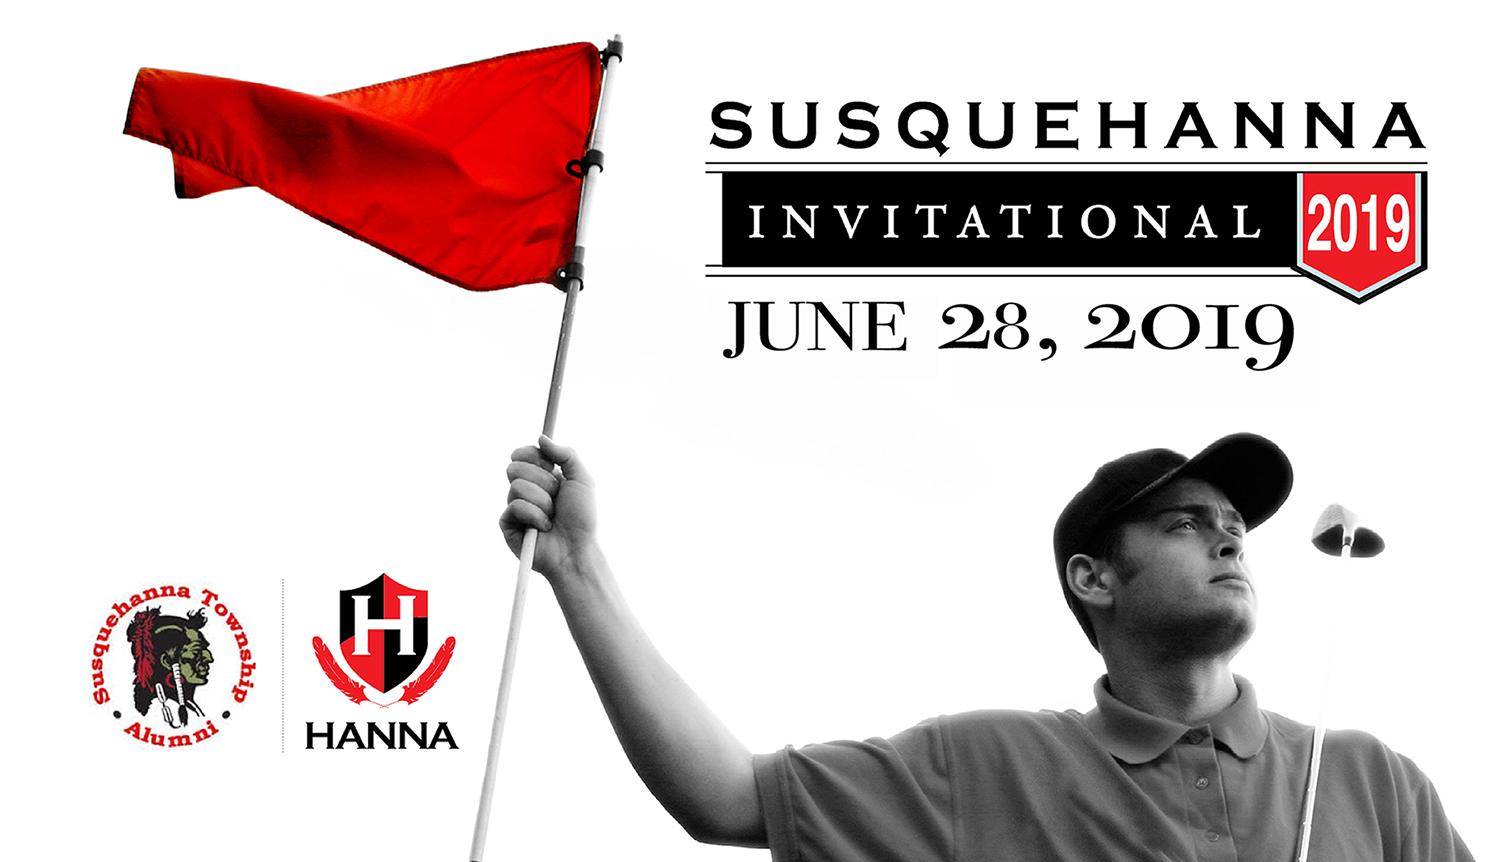 2019 Susquehanna Invitational Golf Tournament & HANNA Social